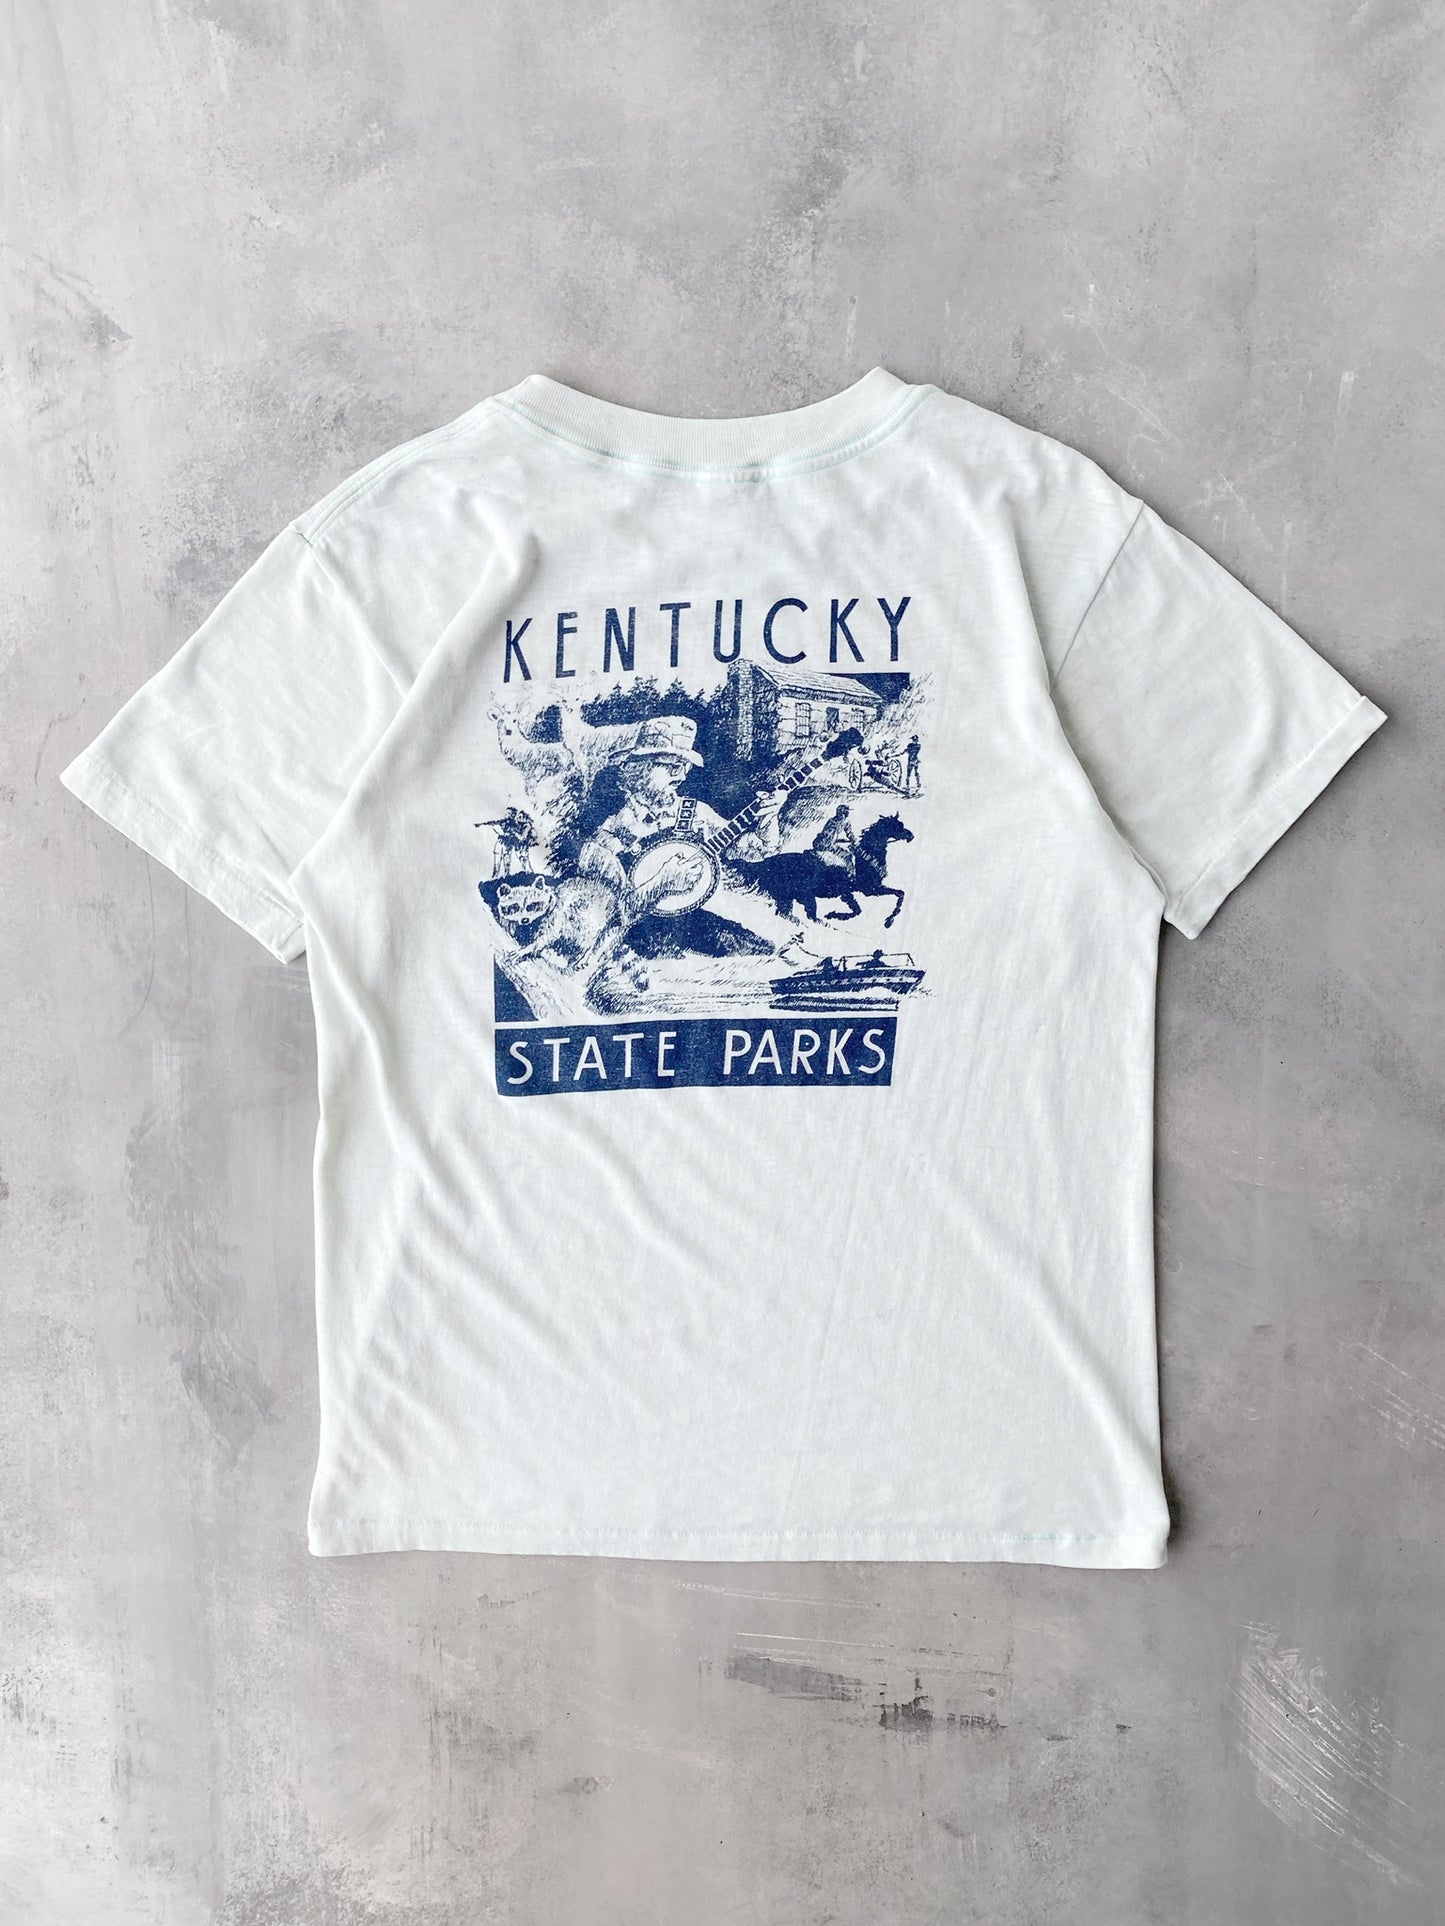 Harrodsburg, Kentucky T-Shirt 80's - Medium